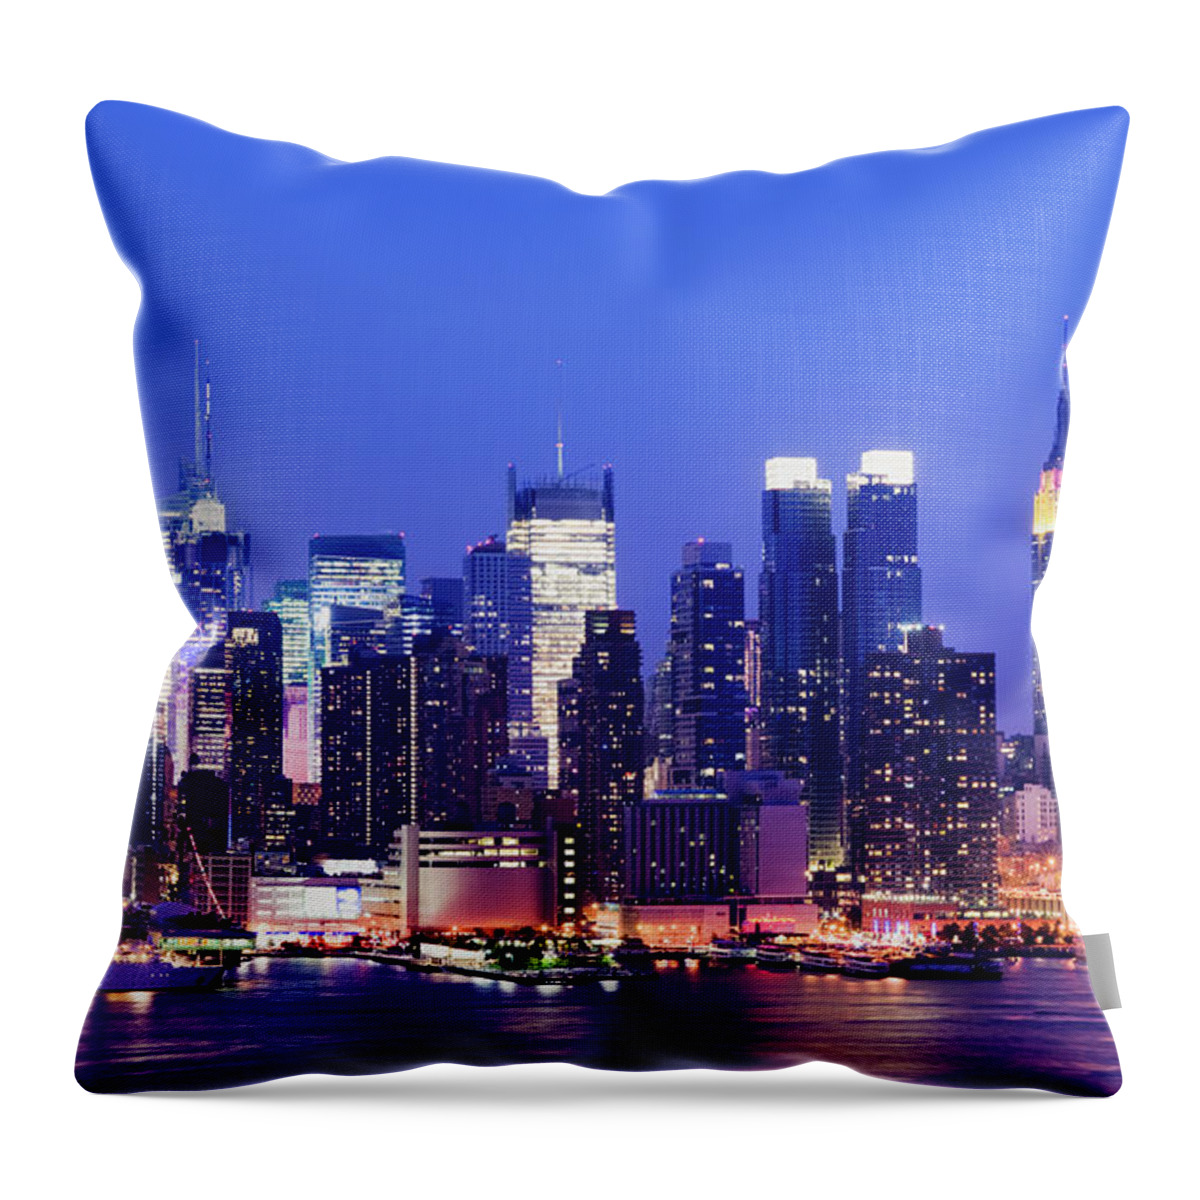 Water's Edge Throw Pillow featuring the photograph Midtown Manhattan City Skyline At Night by Deejpilot